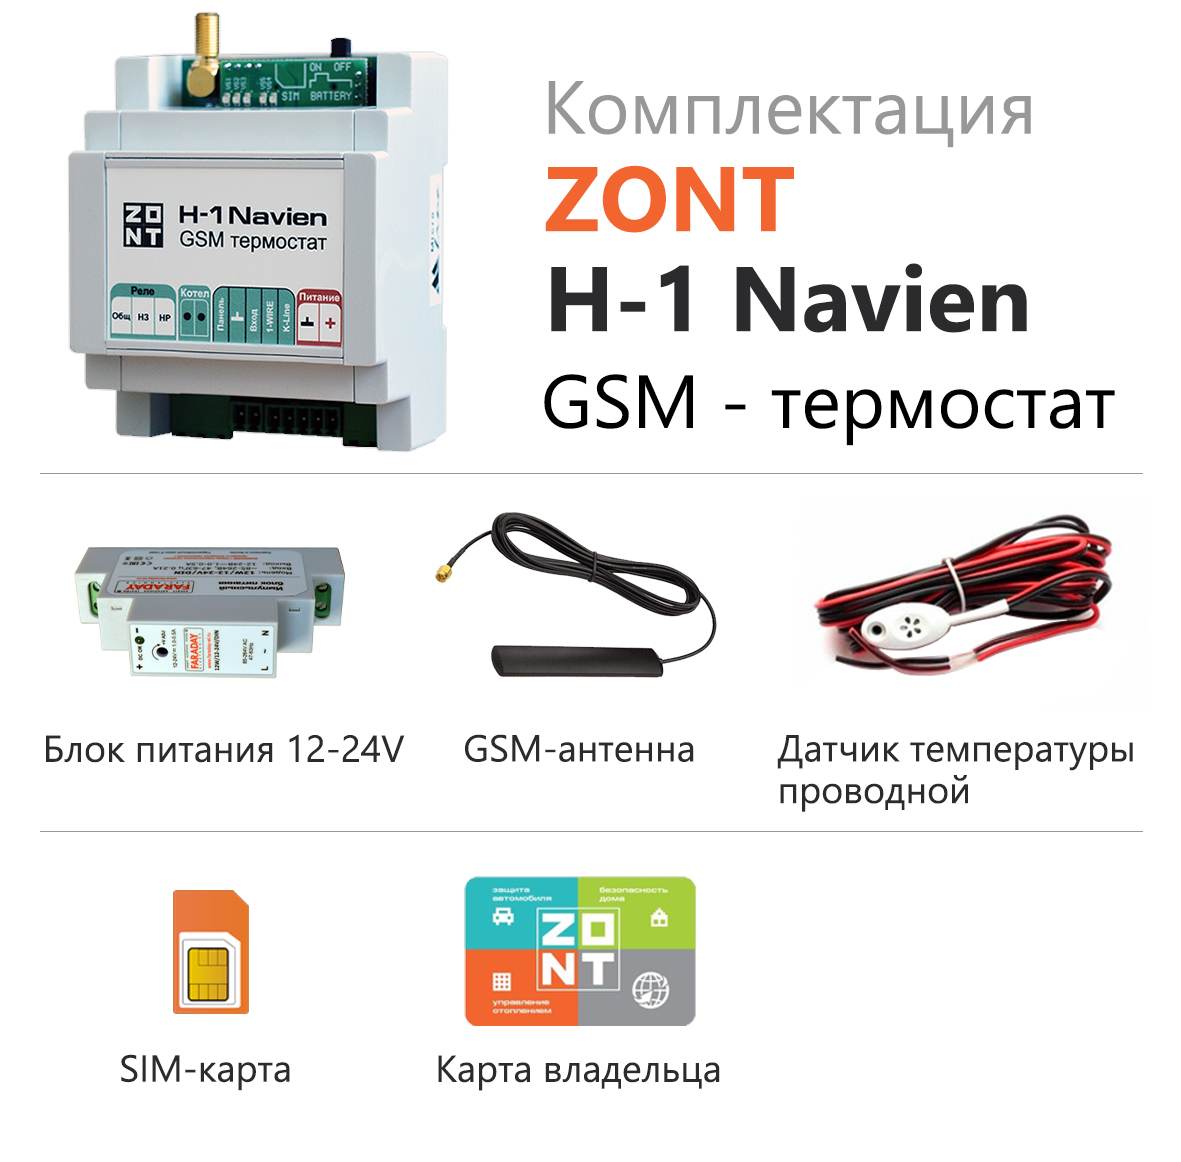 Zont v. Zont термостат h-1. Термостат Zont h-1v New (GSM, Wi-Fi, din). GSM-термостат Zont h-1v. GSM-термостат Zont h-1.